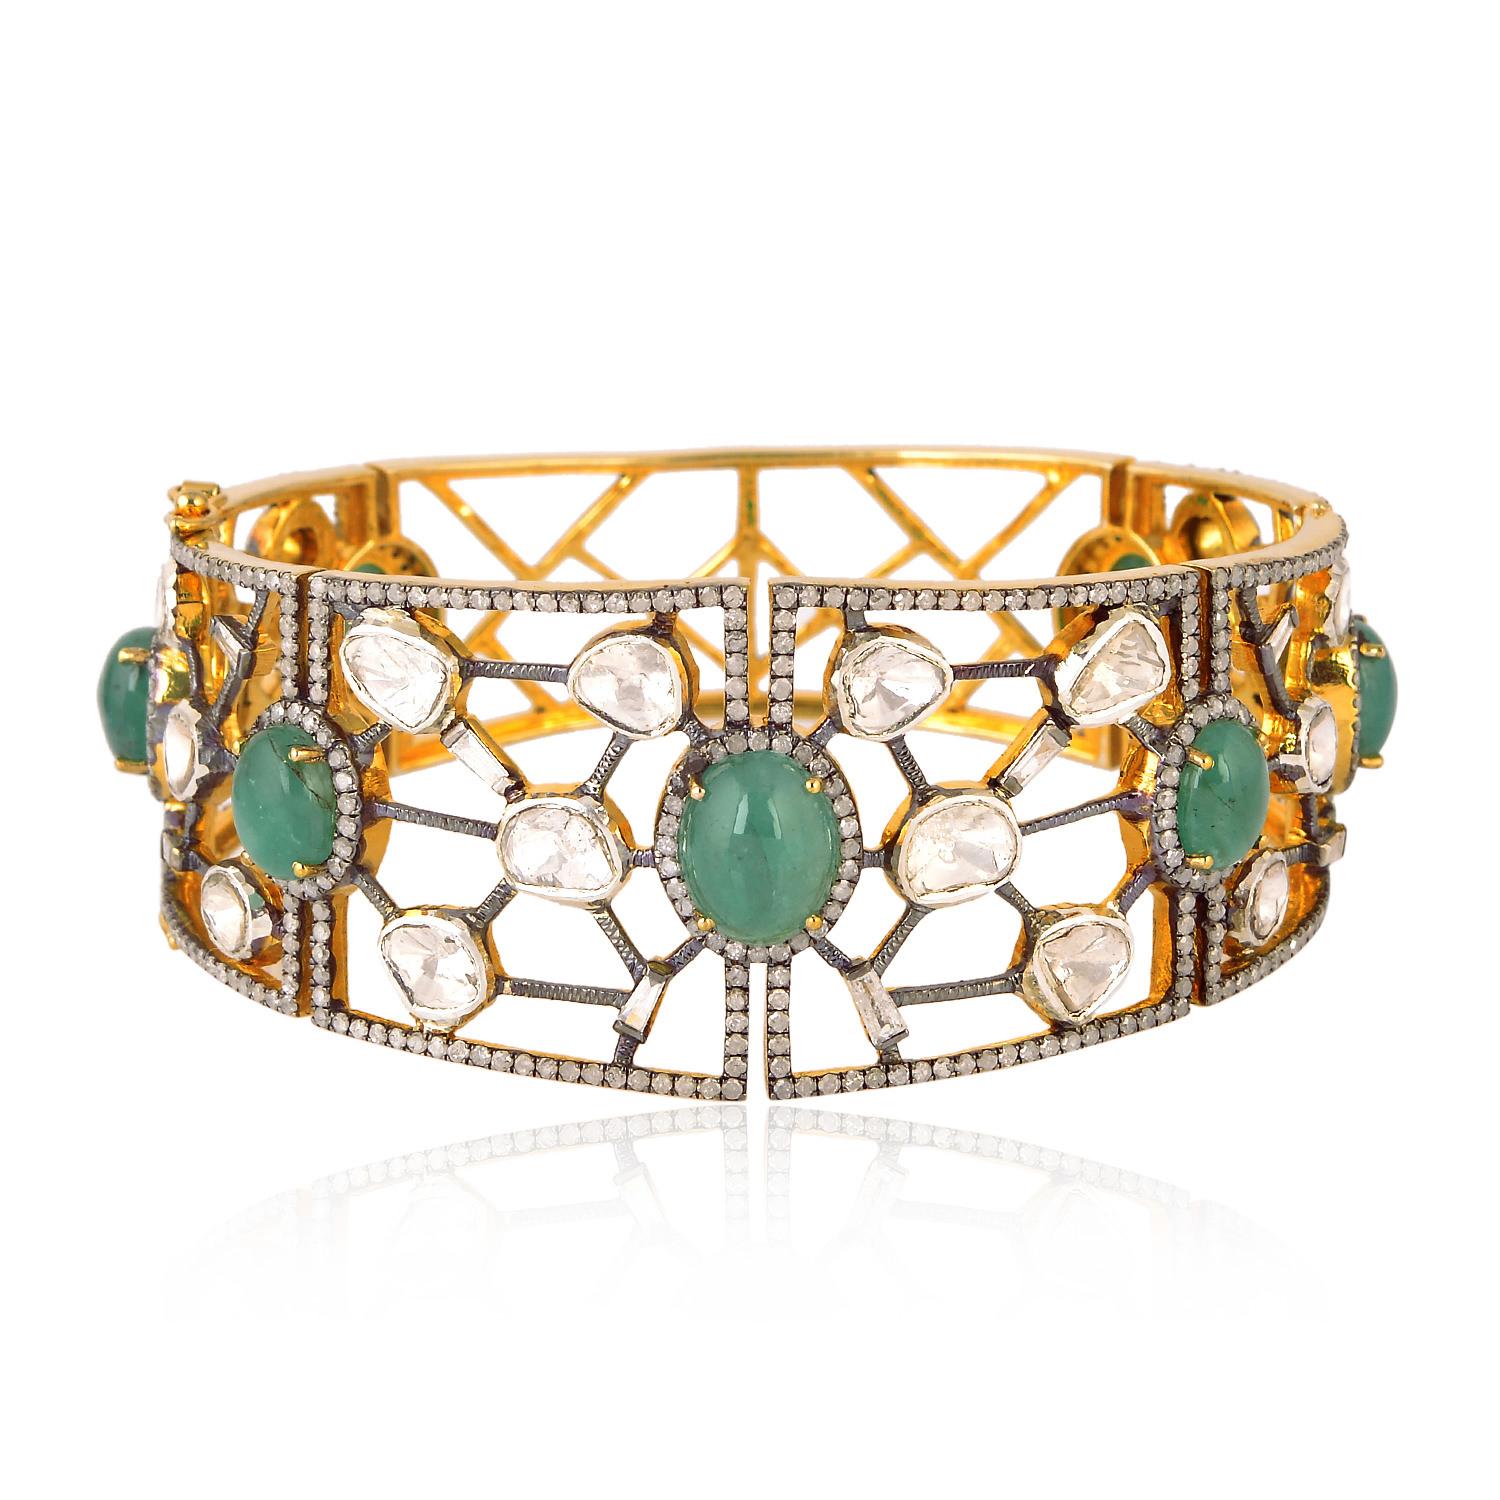 Art Deco Emerald & Rose Cut Diamond Cuff Bracelet with Grill Pattern in 18k Gold & Silver For Sale